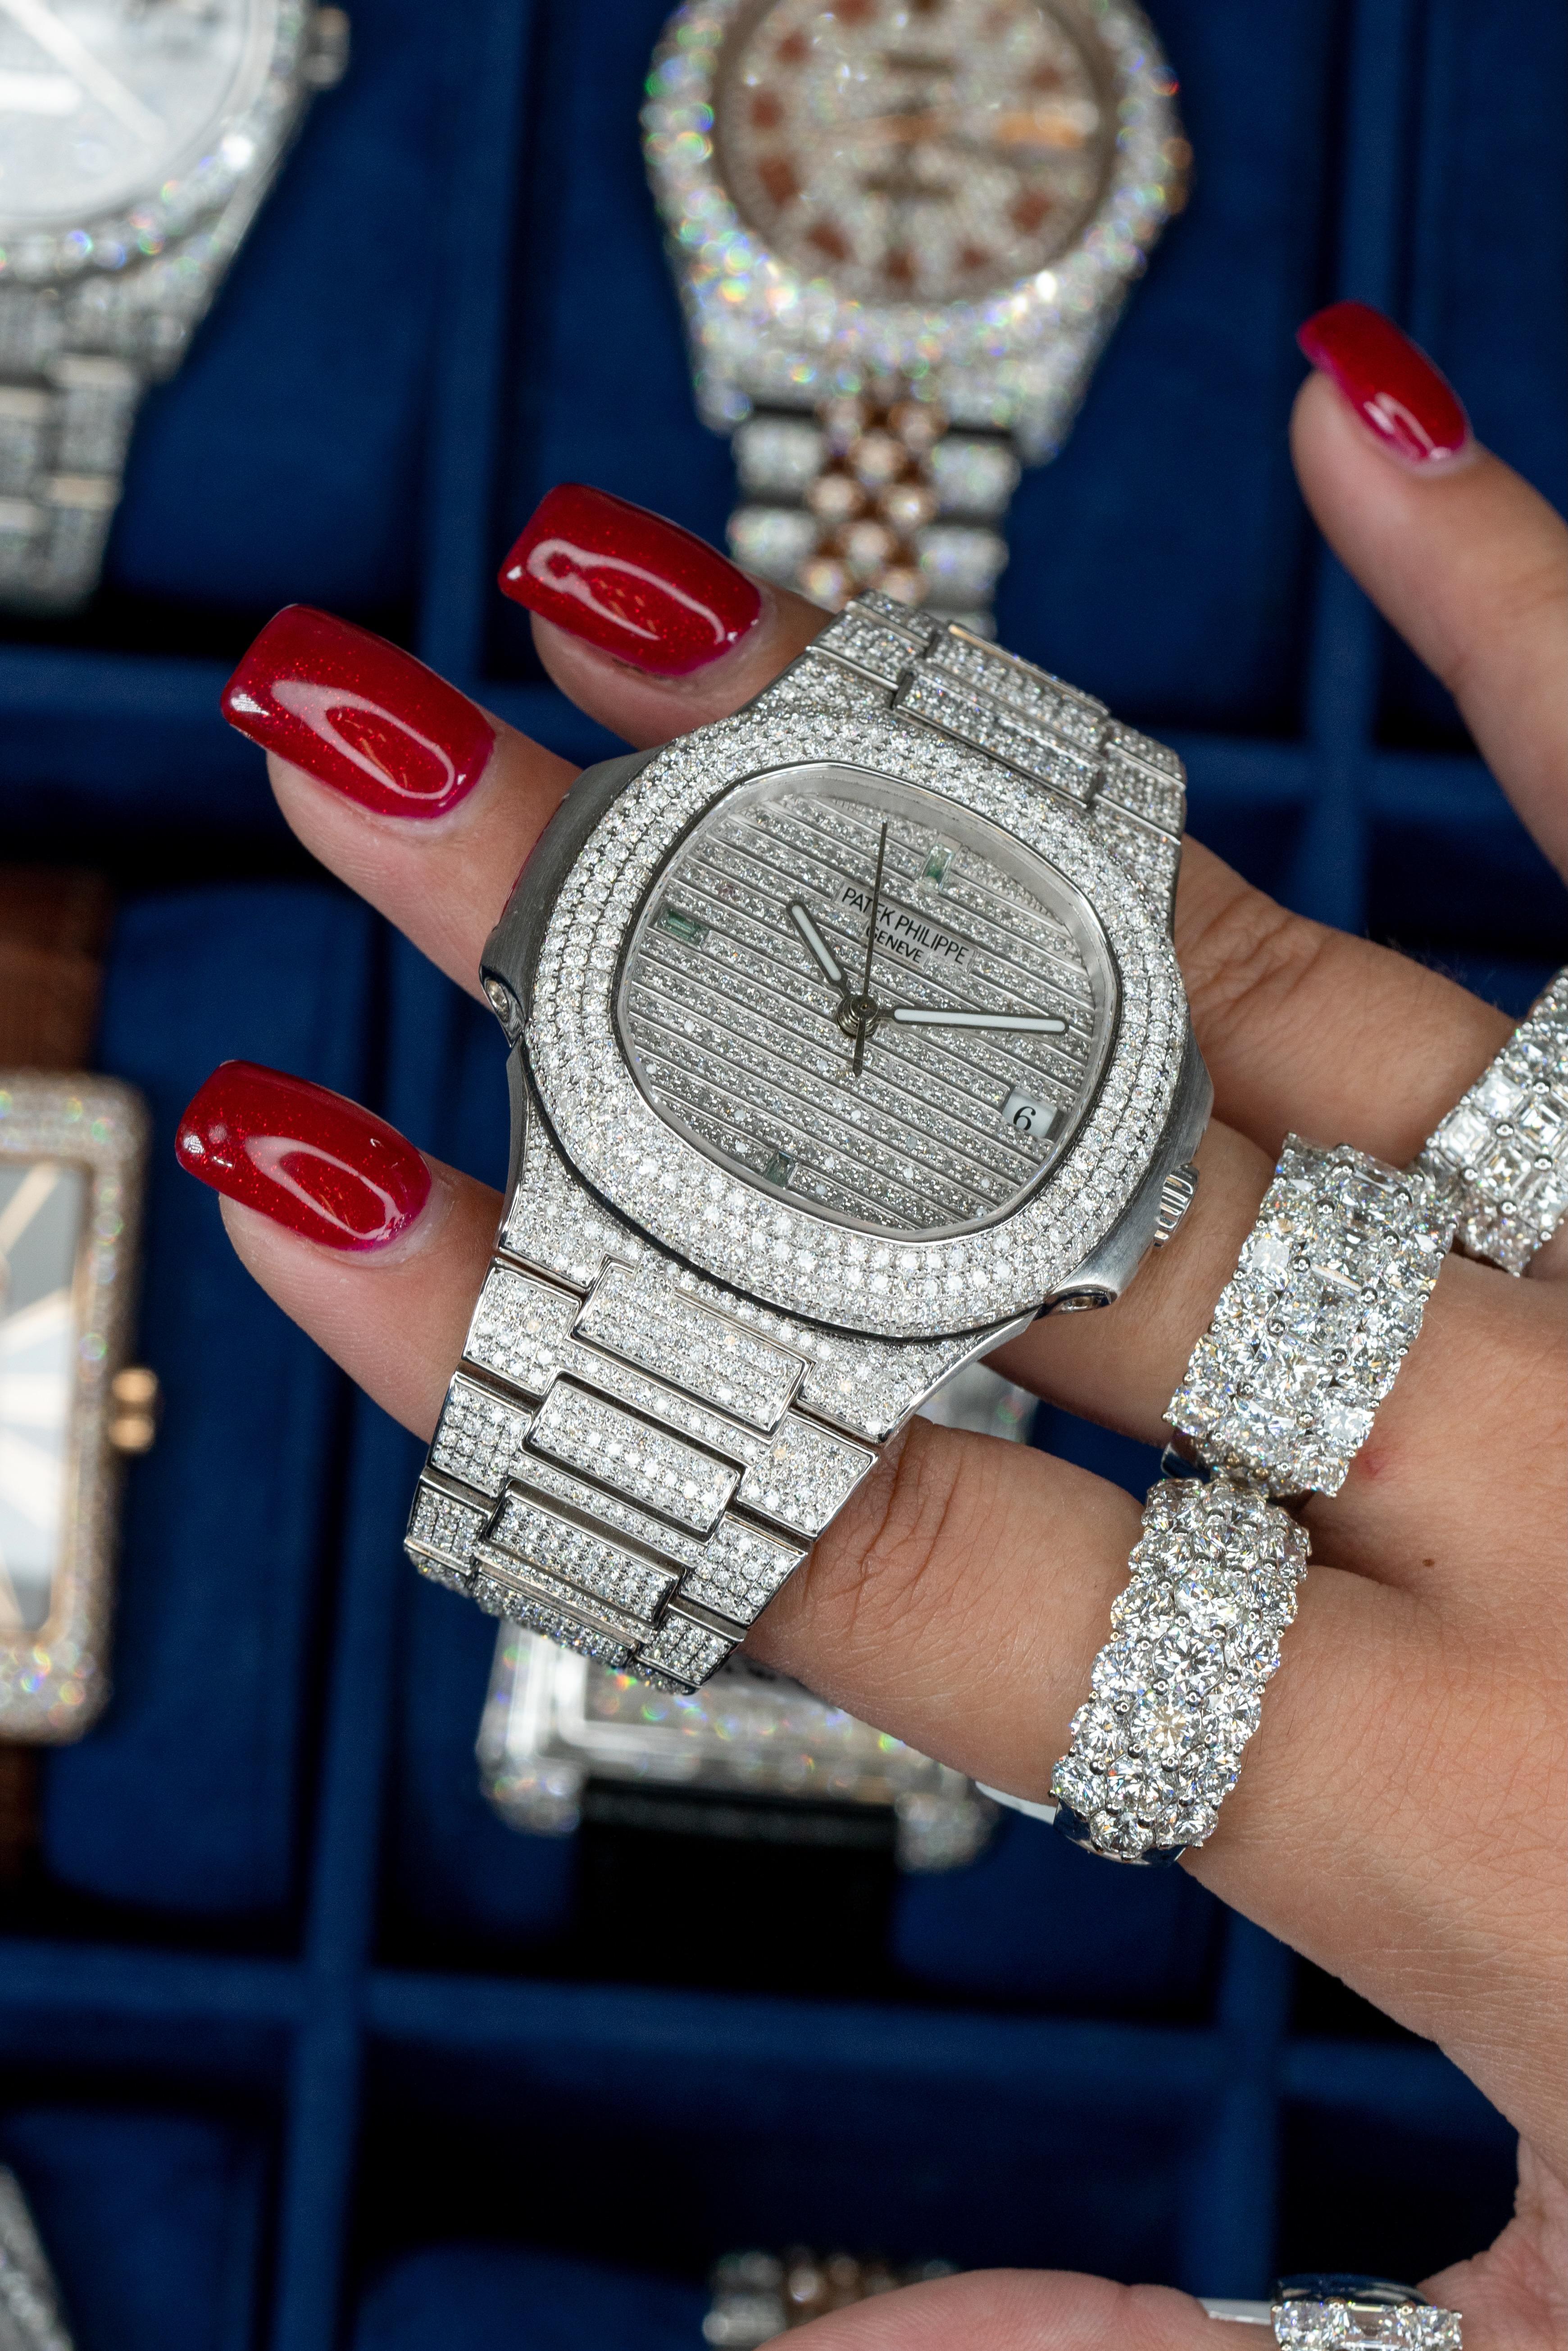 Patek Philippe 5711 All Diamond Watch 18 Karat in Stock For Sale 1